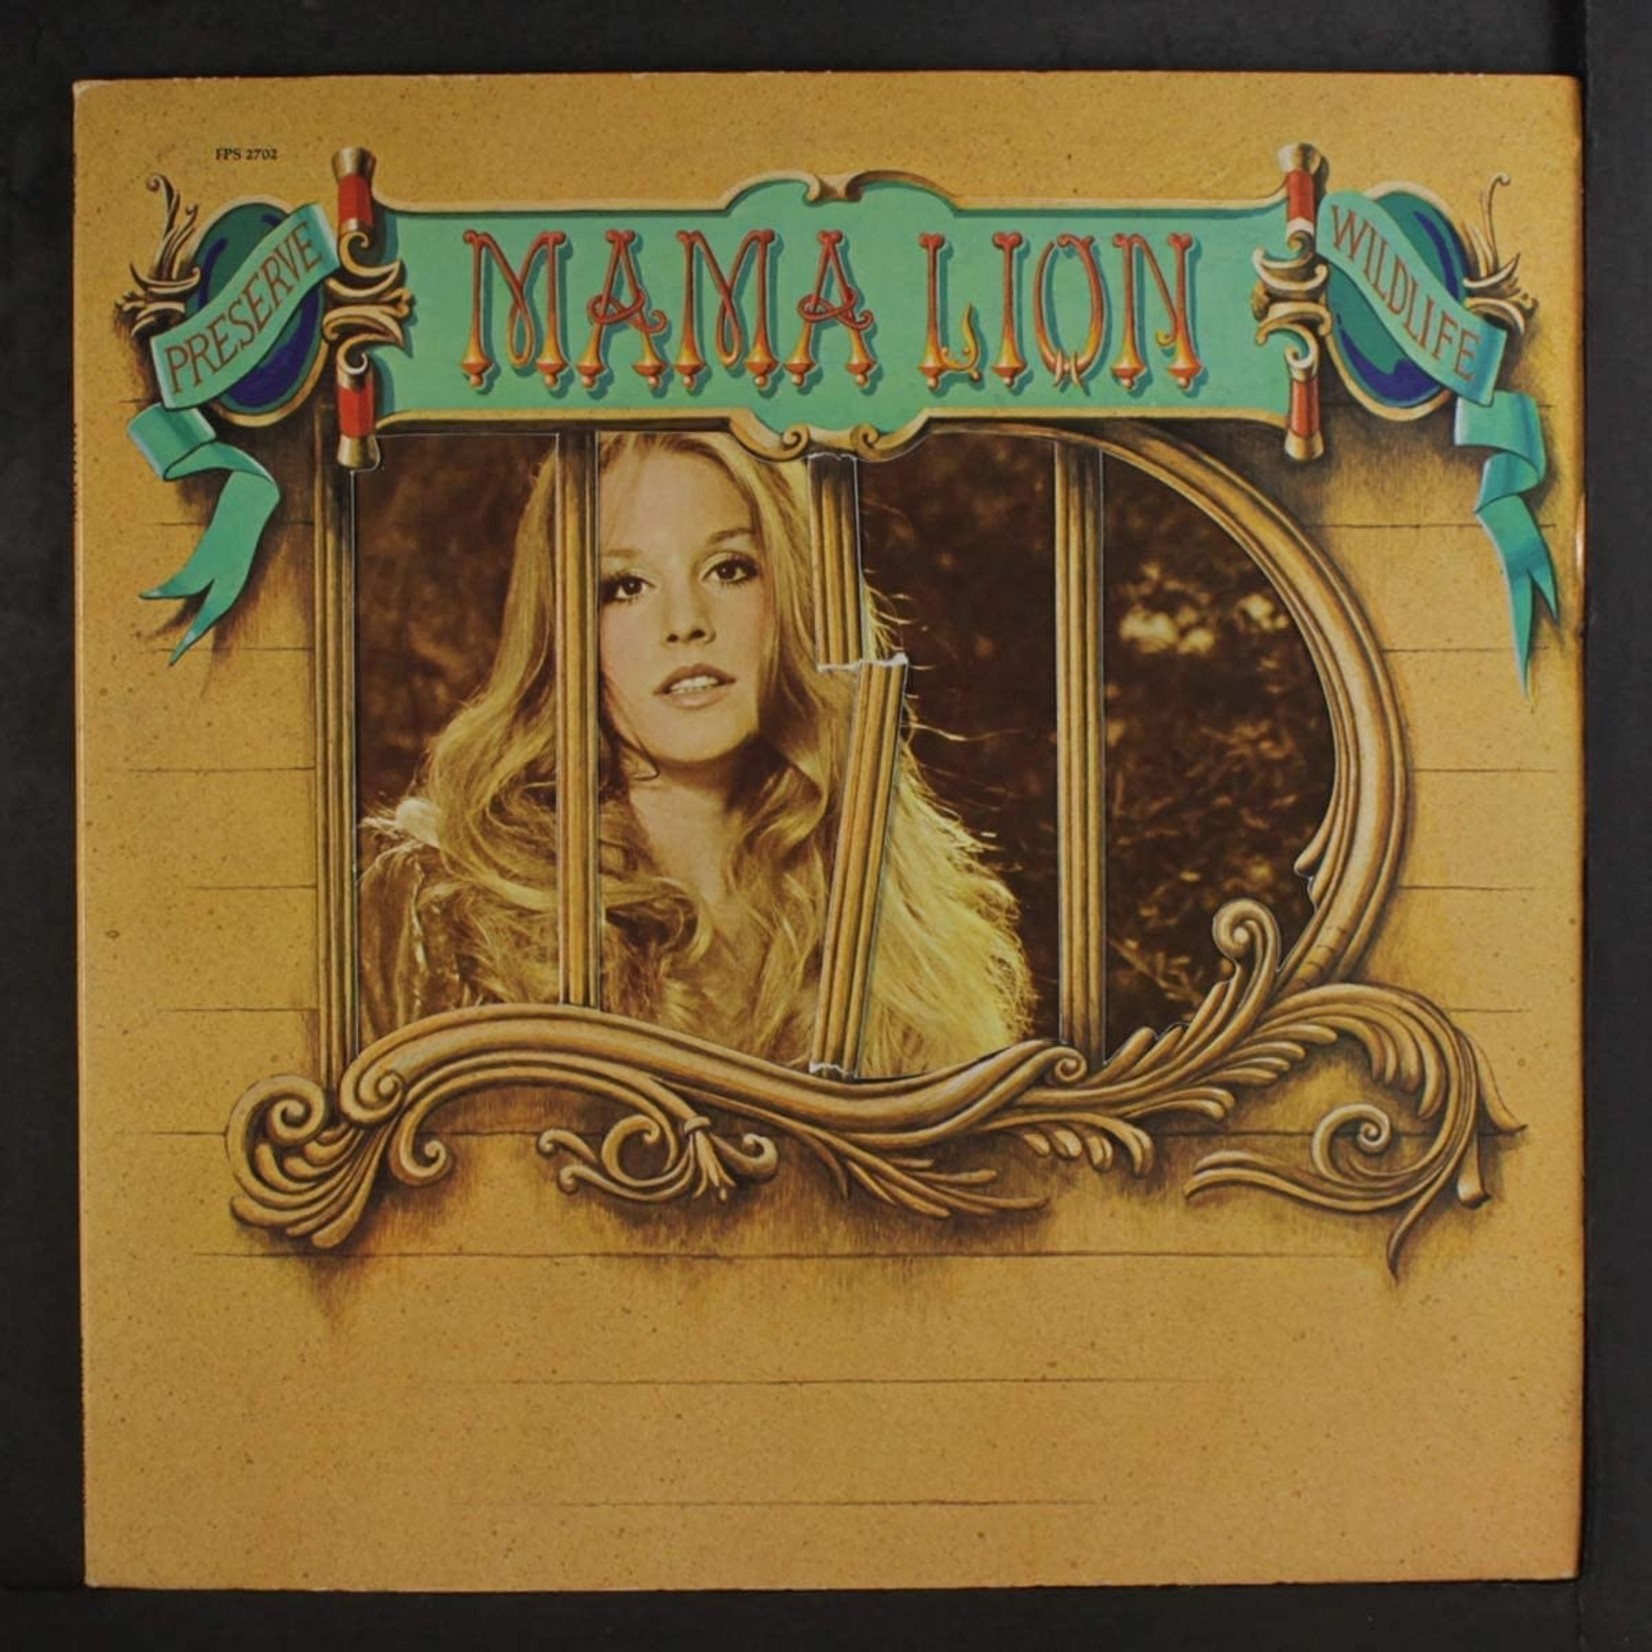 Vinyl Mama Lion - Preserve Wildlife